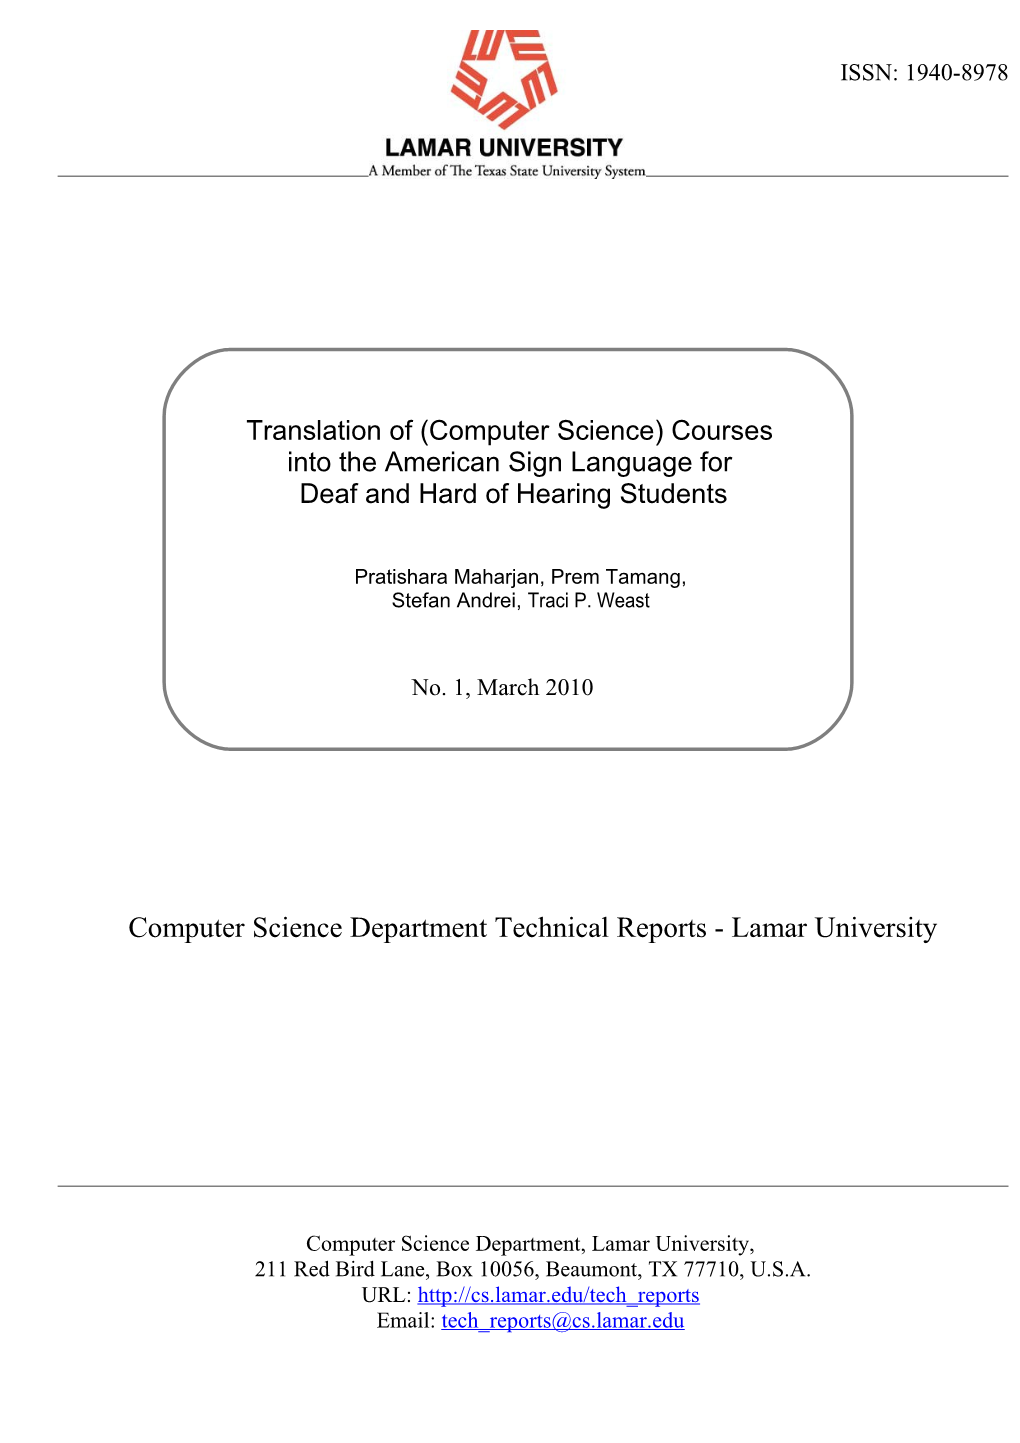 Computer Science Department Technical Reports - Lamar University